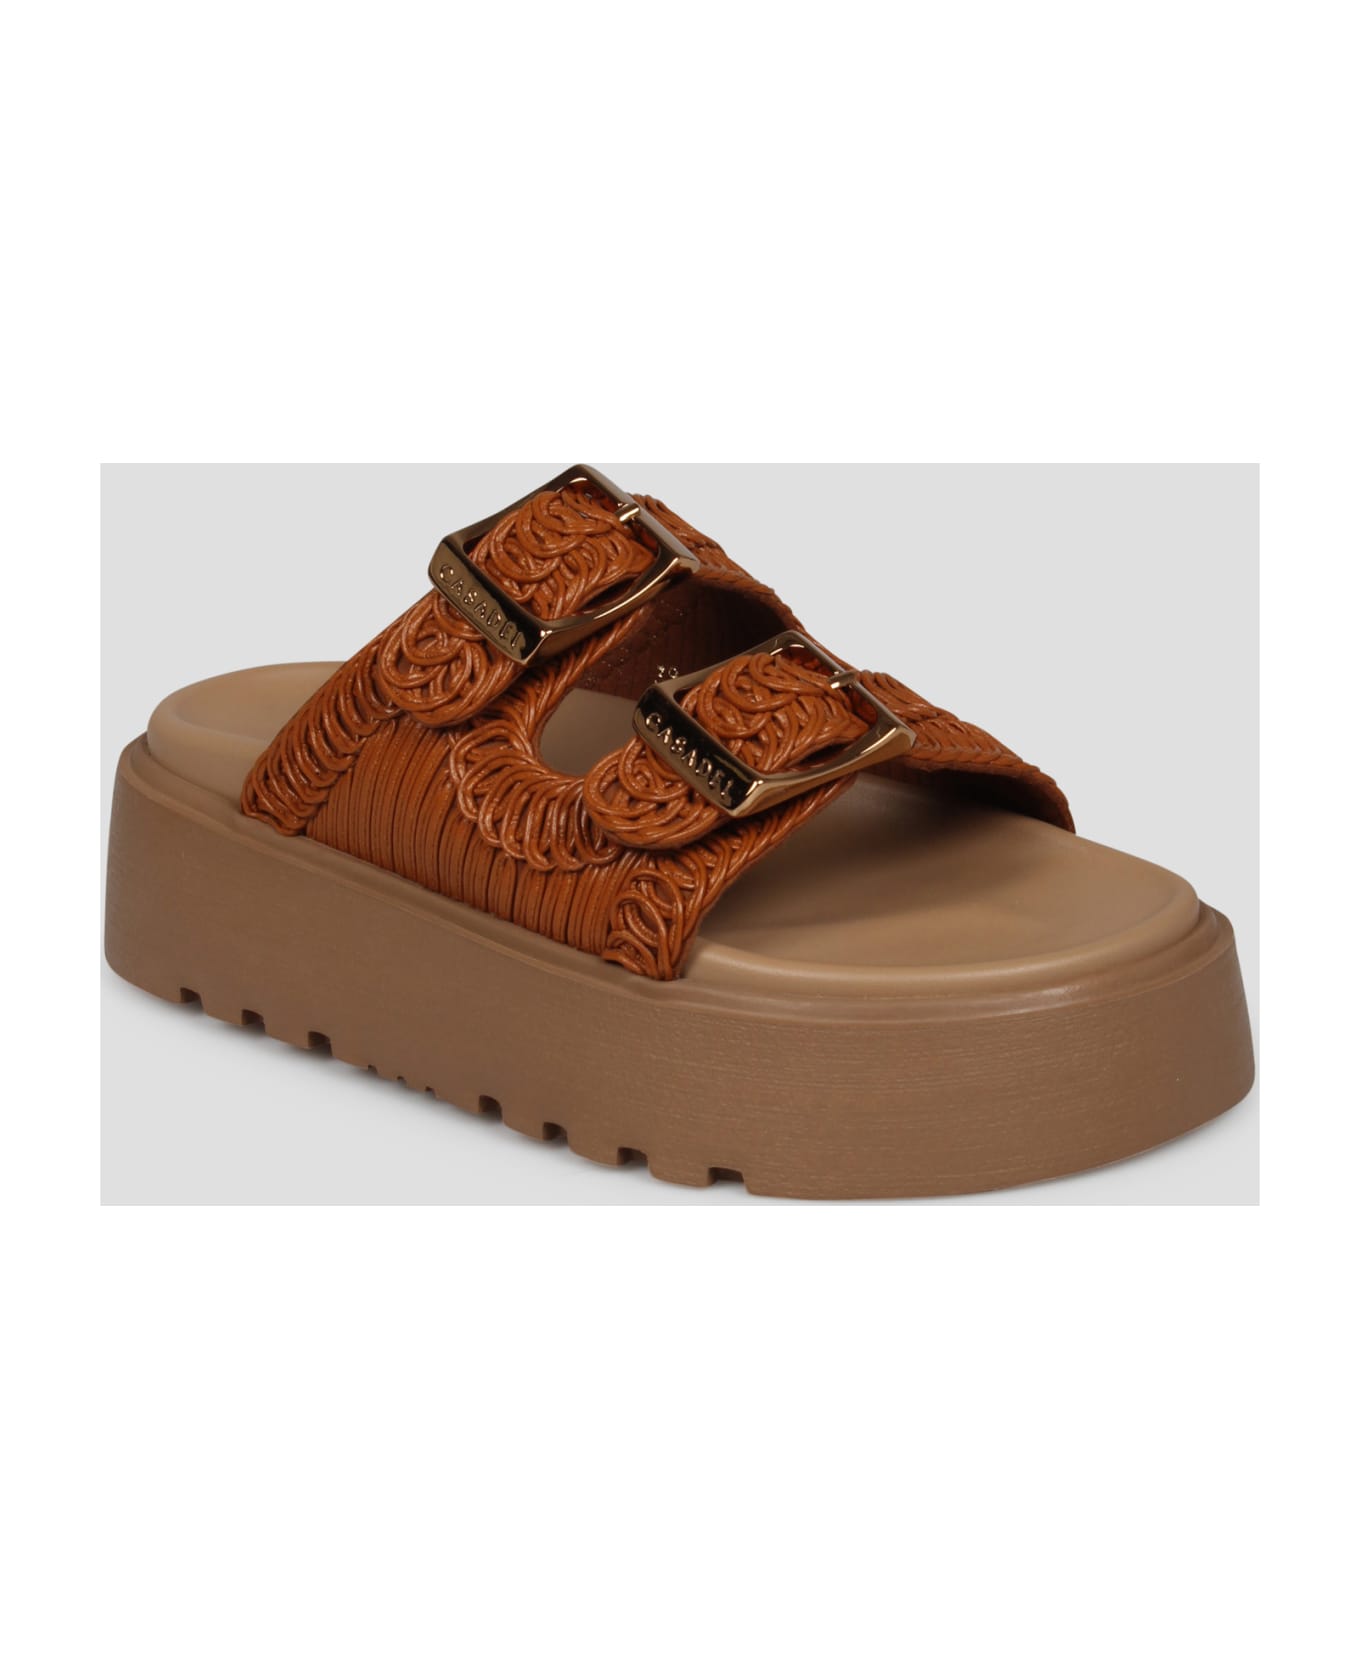 Casadei Birky Ale Slides Sandals - Brown